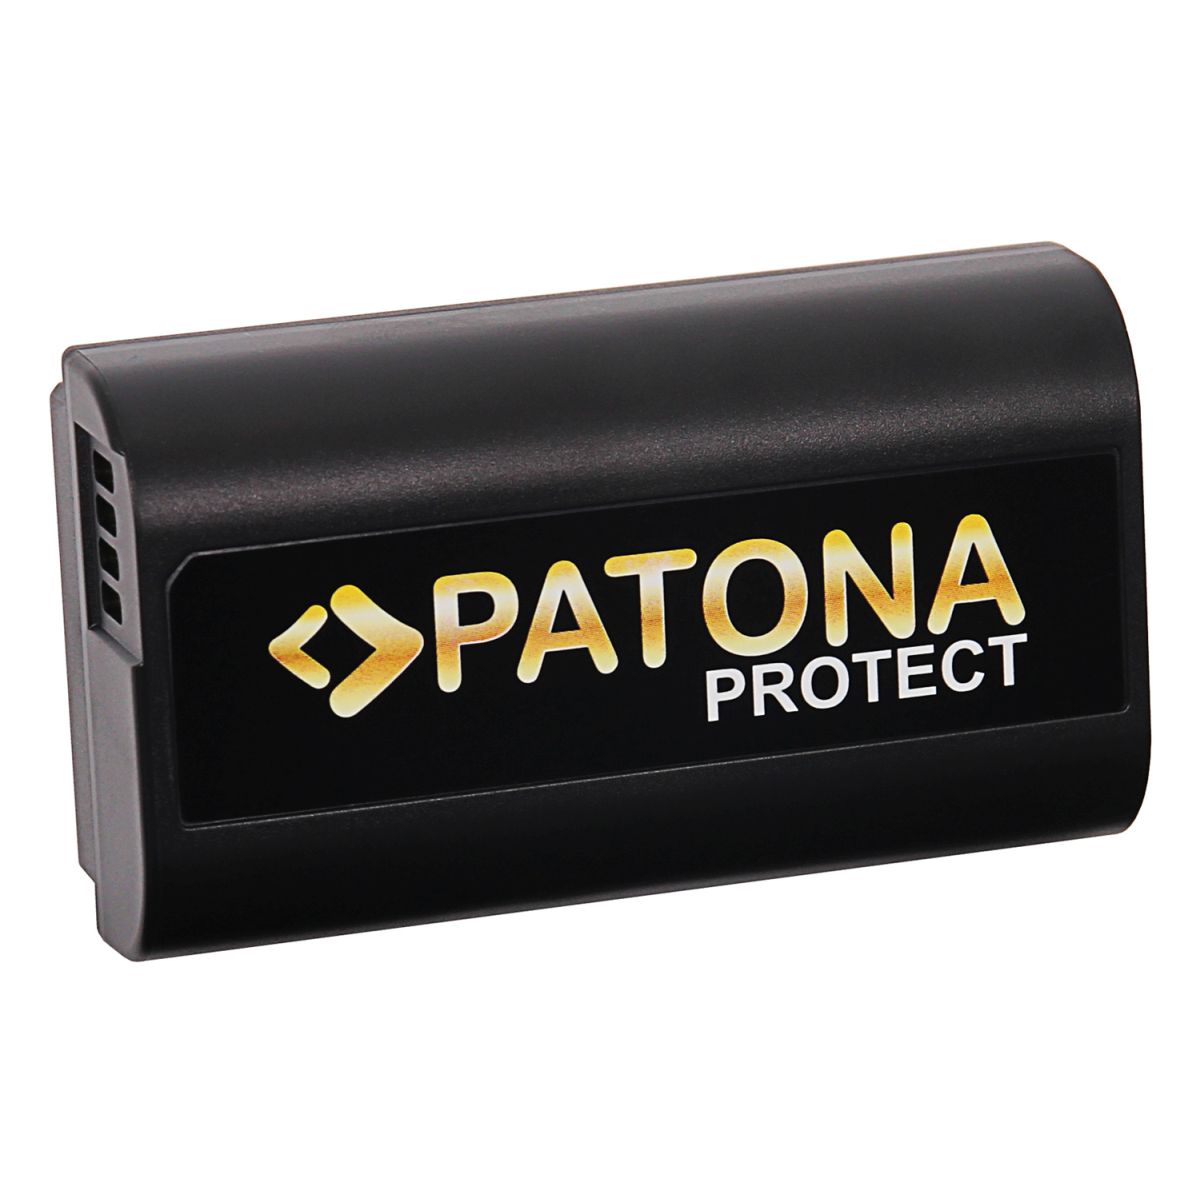 Patona Protect Akku Panasonic DMW-BLJ 31